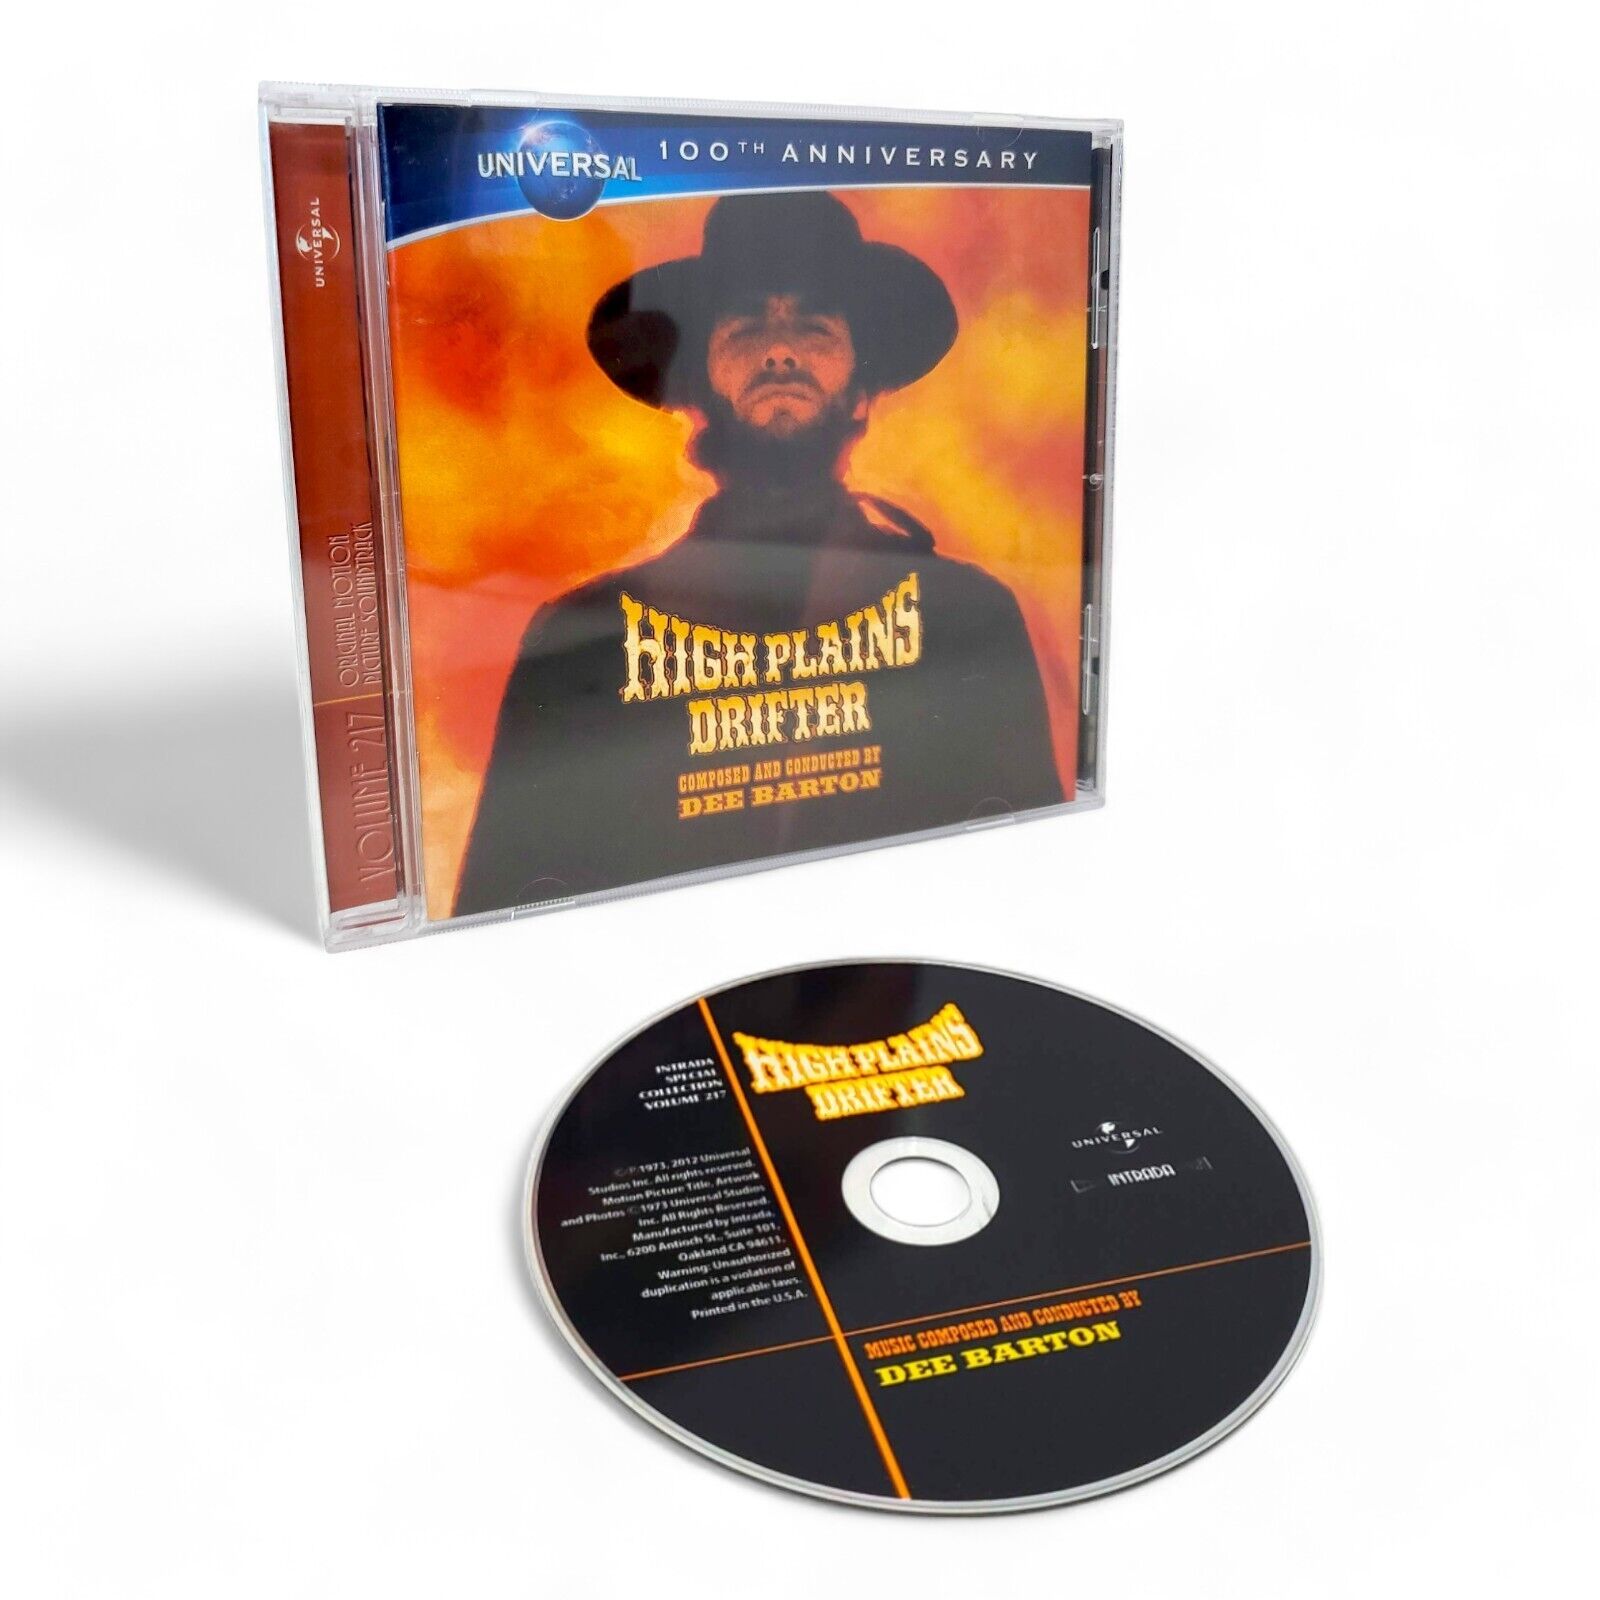 High Plains Drifter Soundtrack Dee Barton CD Intrada Special Collection Vol 217